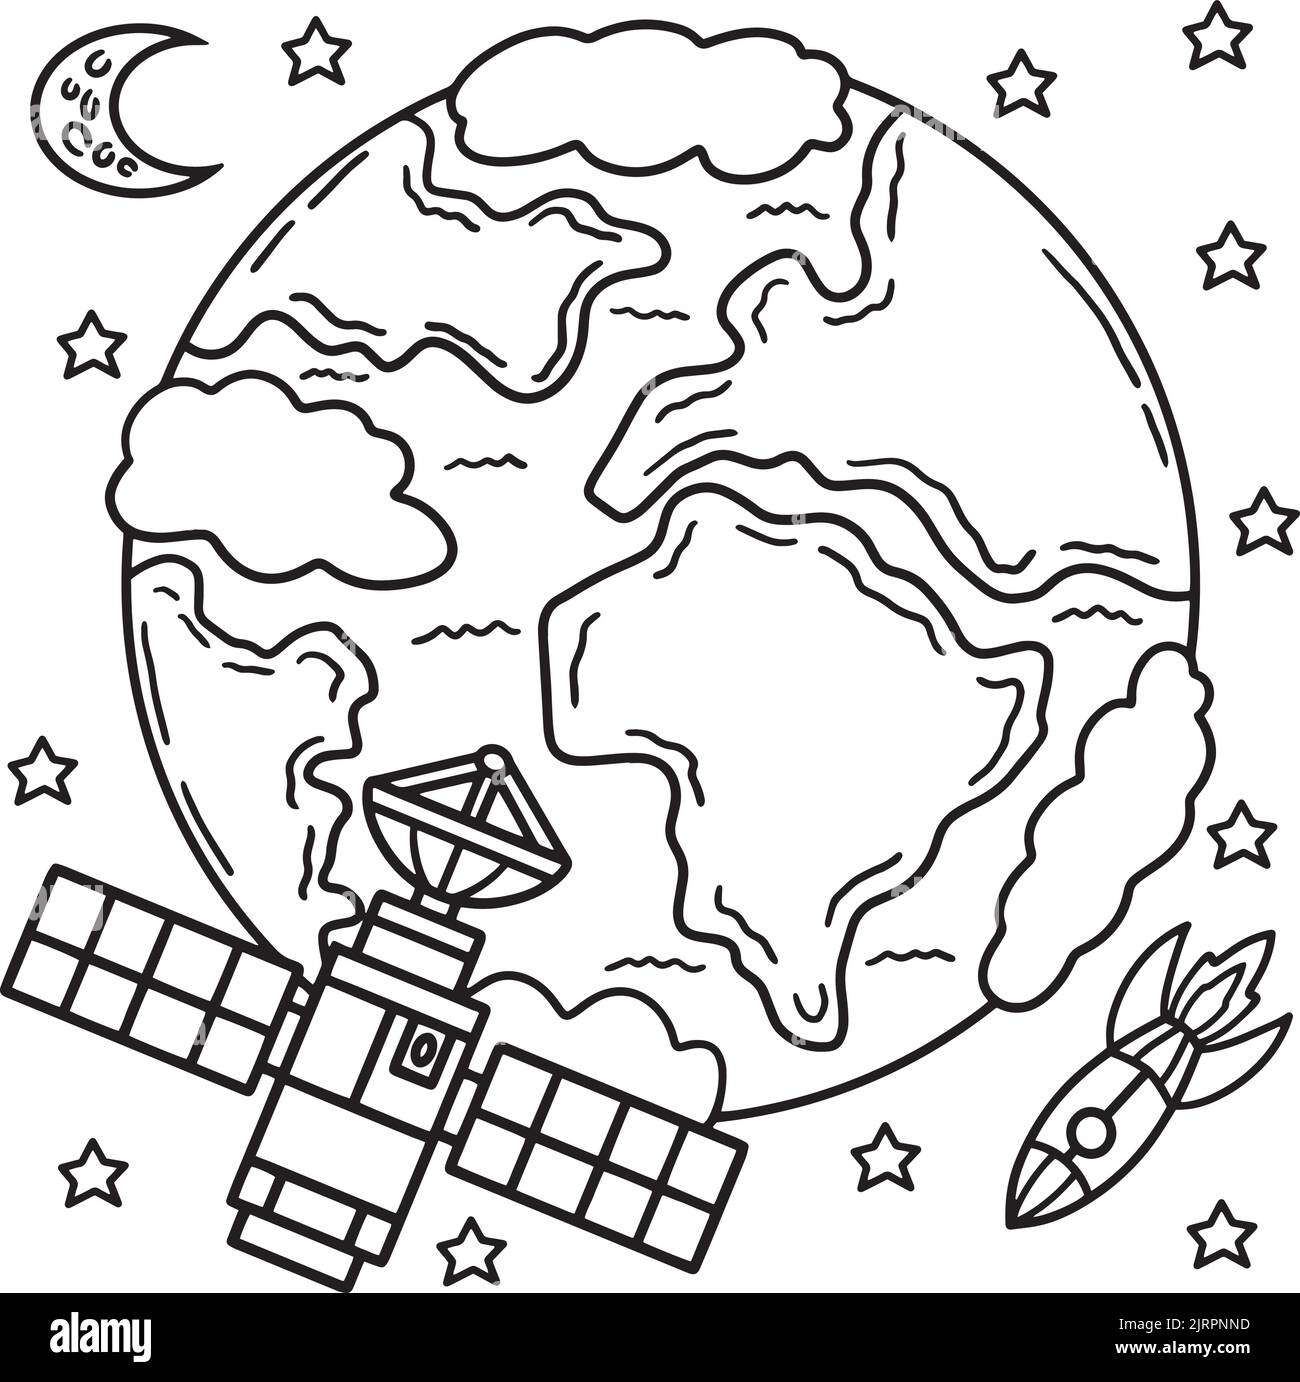 Space Satellite Coloring Page für Kinder Stock Vektor